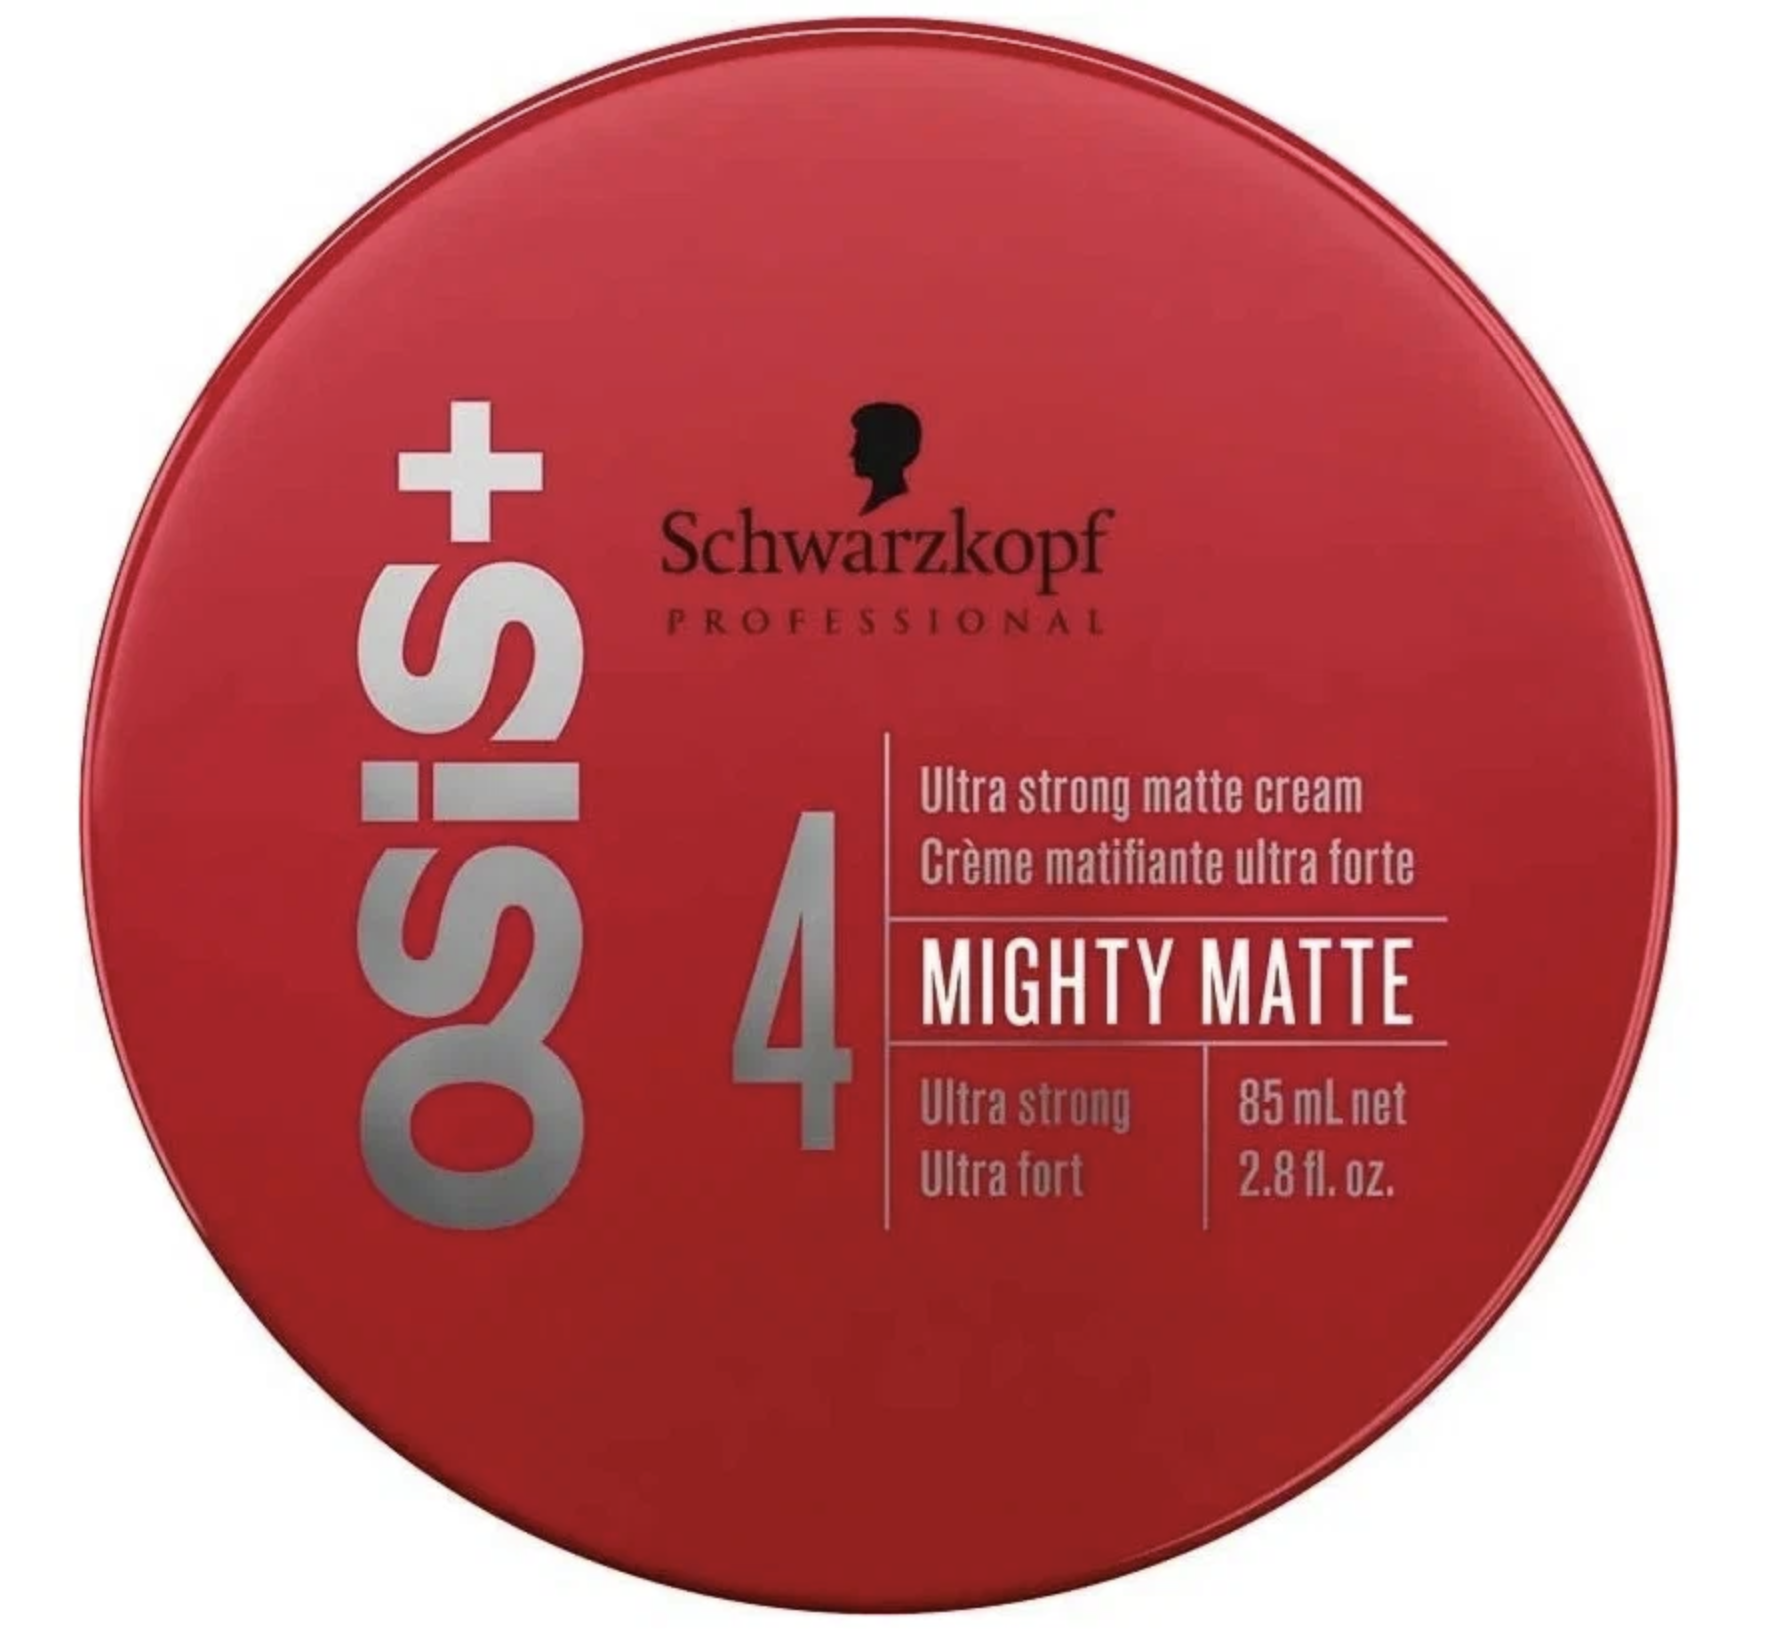   / Schwarzkopf Osis+ 4 -     Mighty Matte 85 